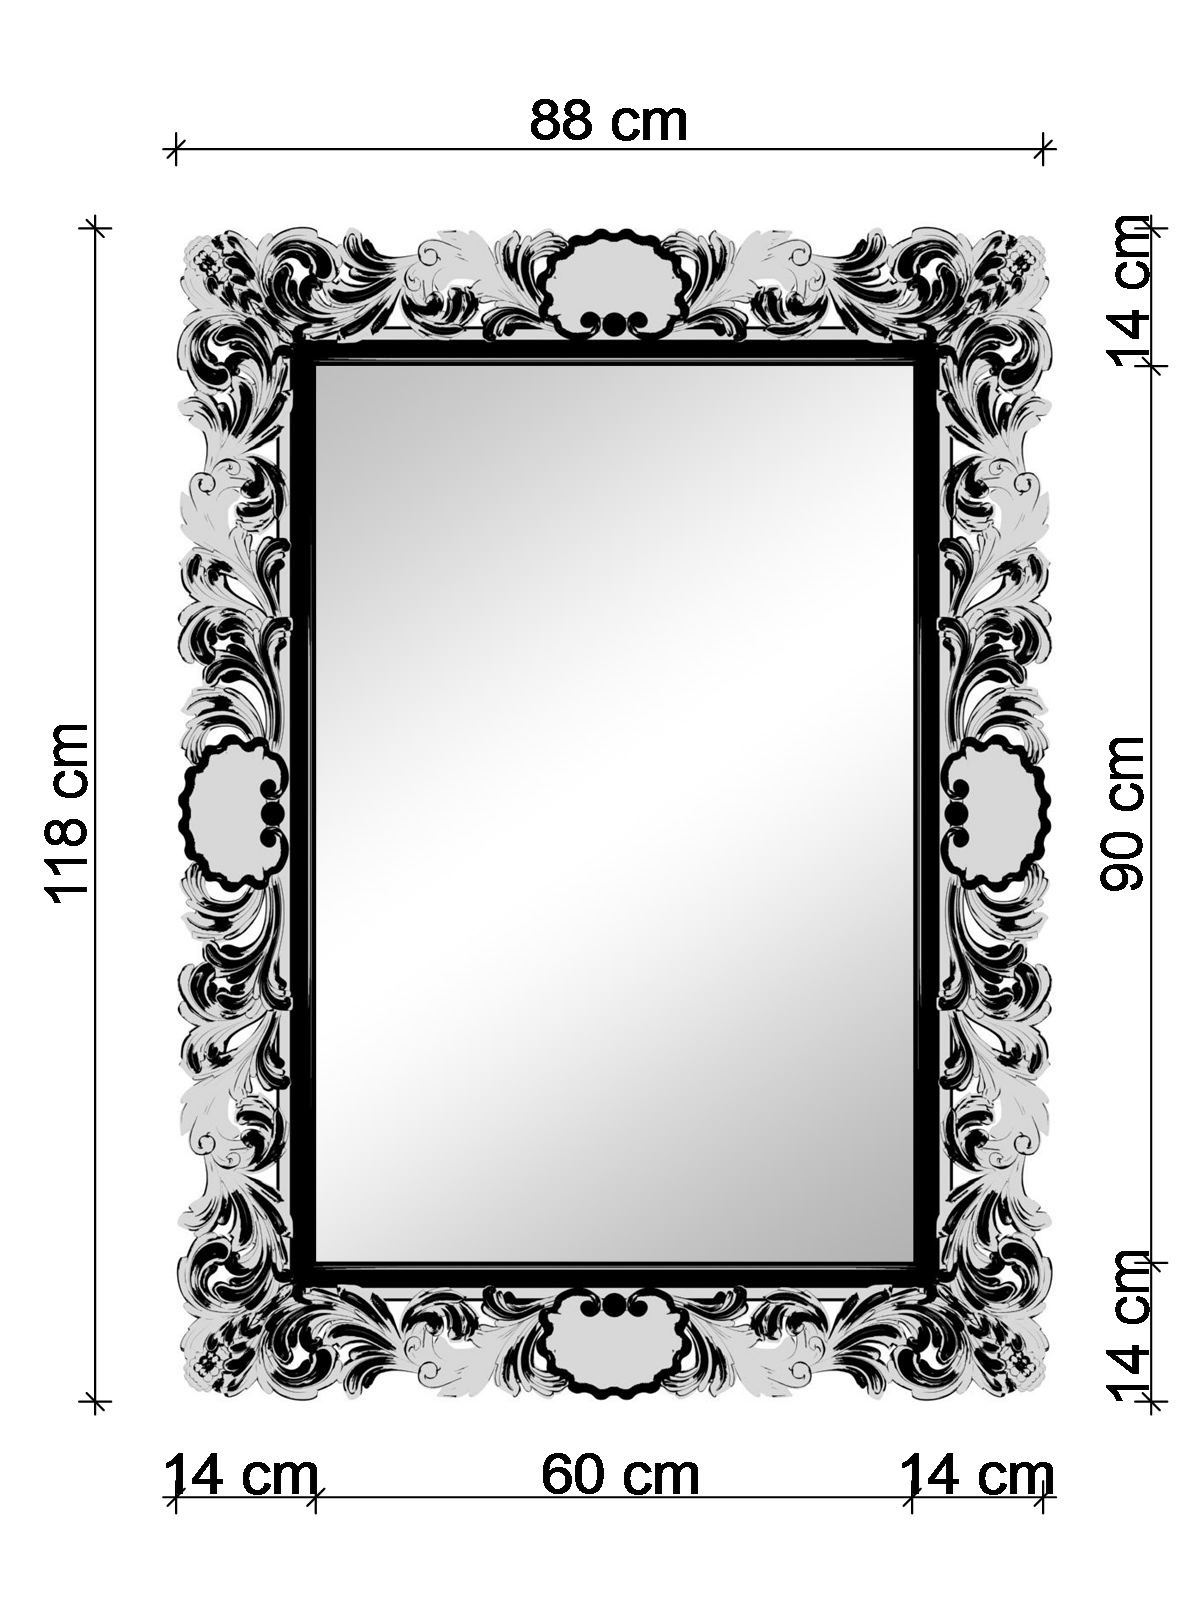 Размер настенных зеркал. Зеркало настенное Vezzolli. Зеркало настенное в черной раме. Толщина зеркала. Зеркало настенное Размеры.